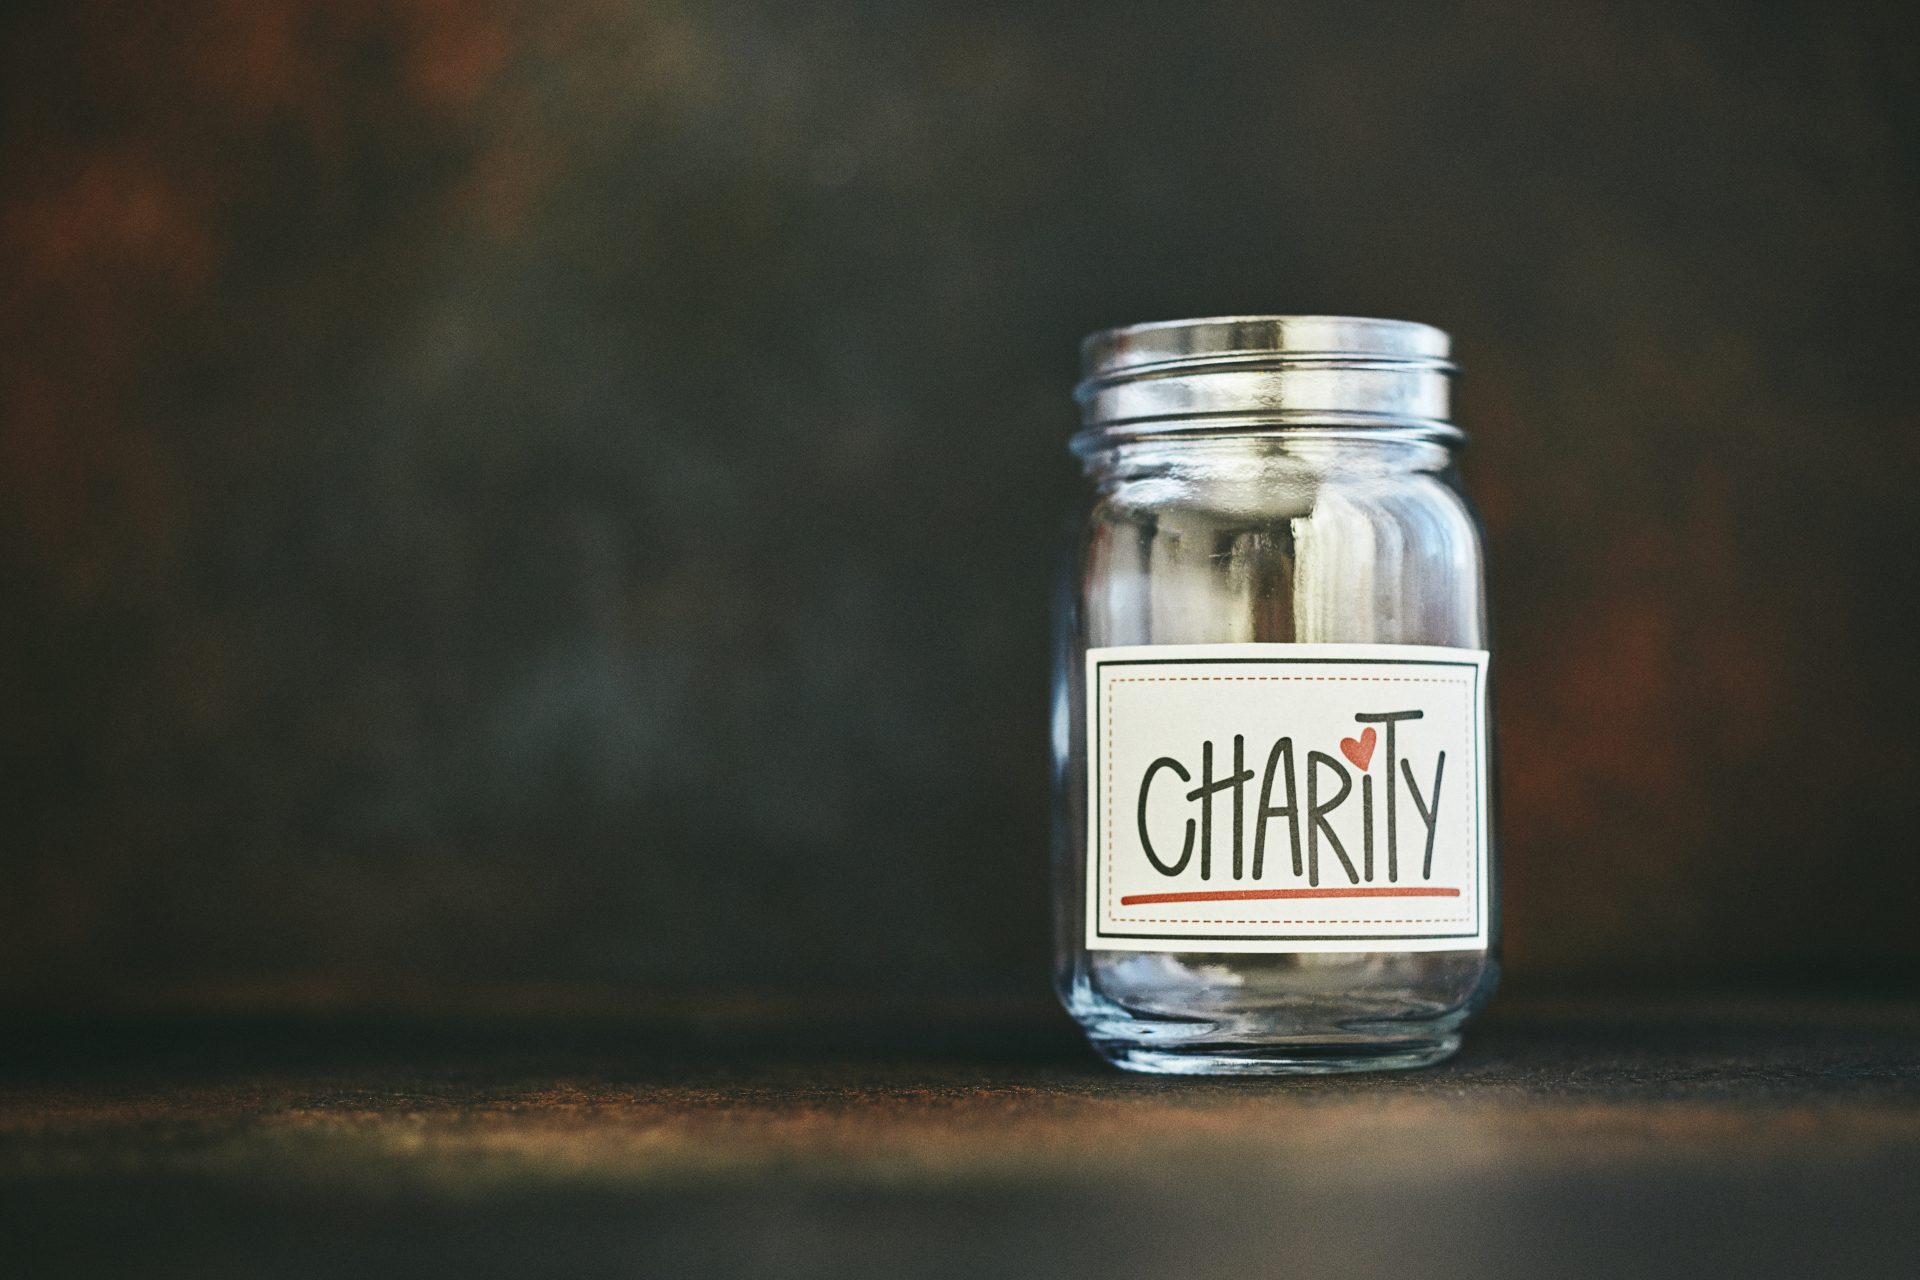 Charitable giving has plummeted